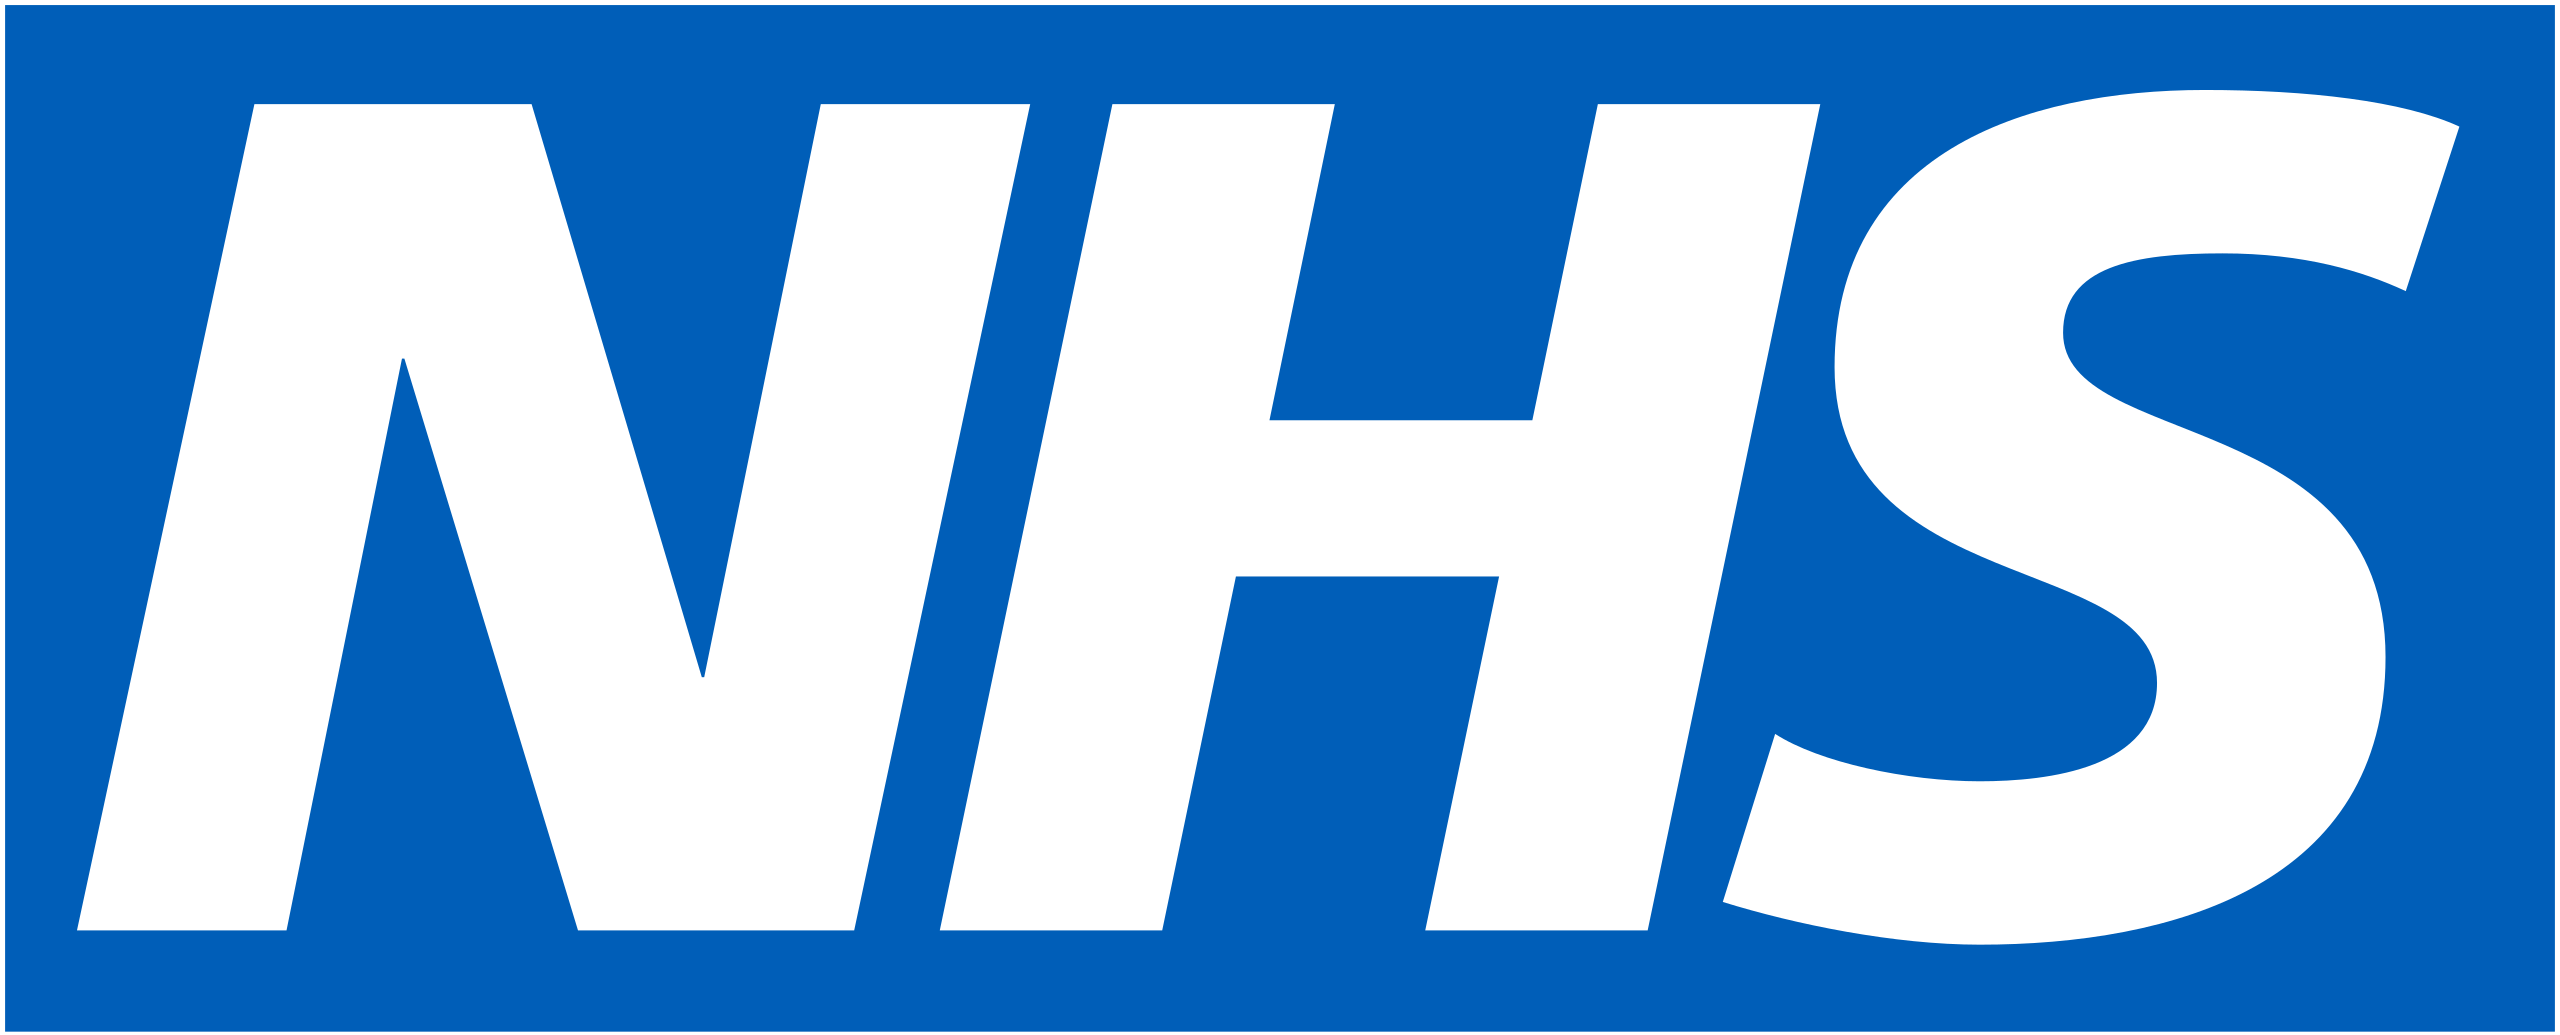 National health service (england) logo.svg